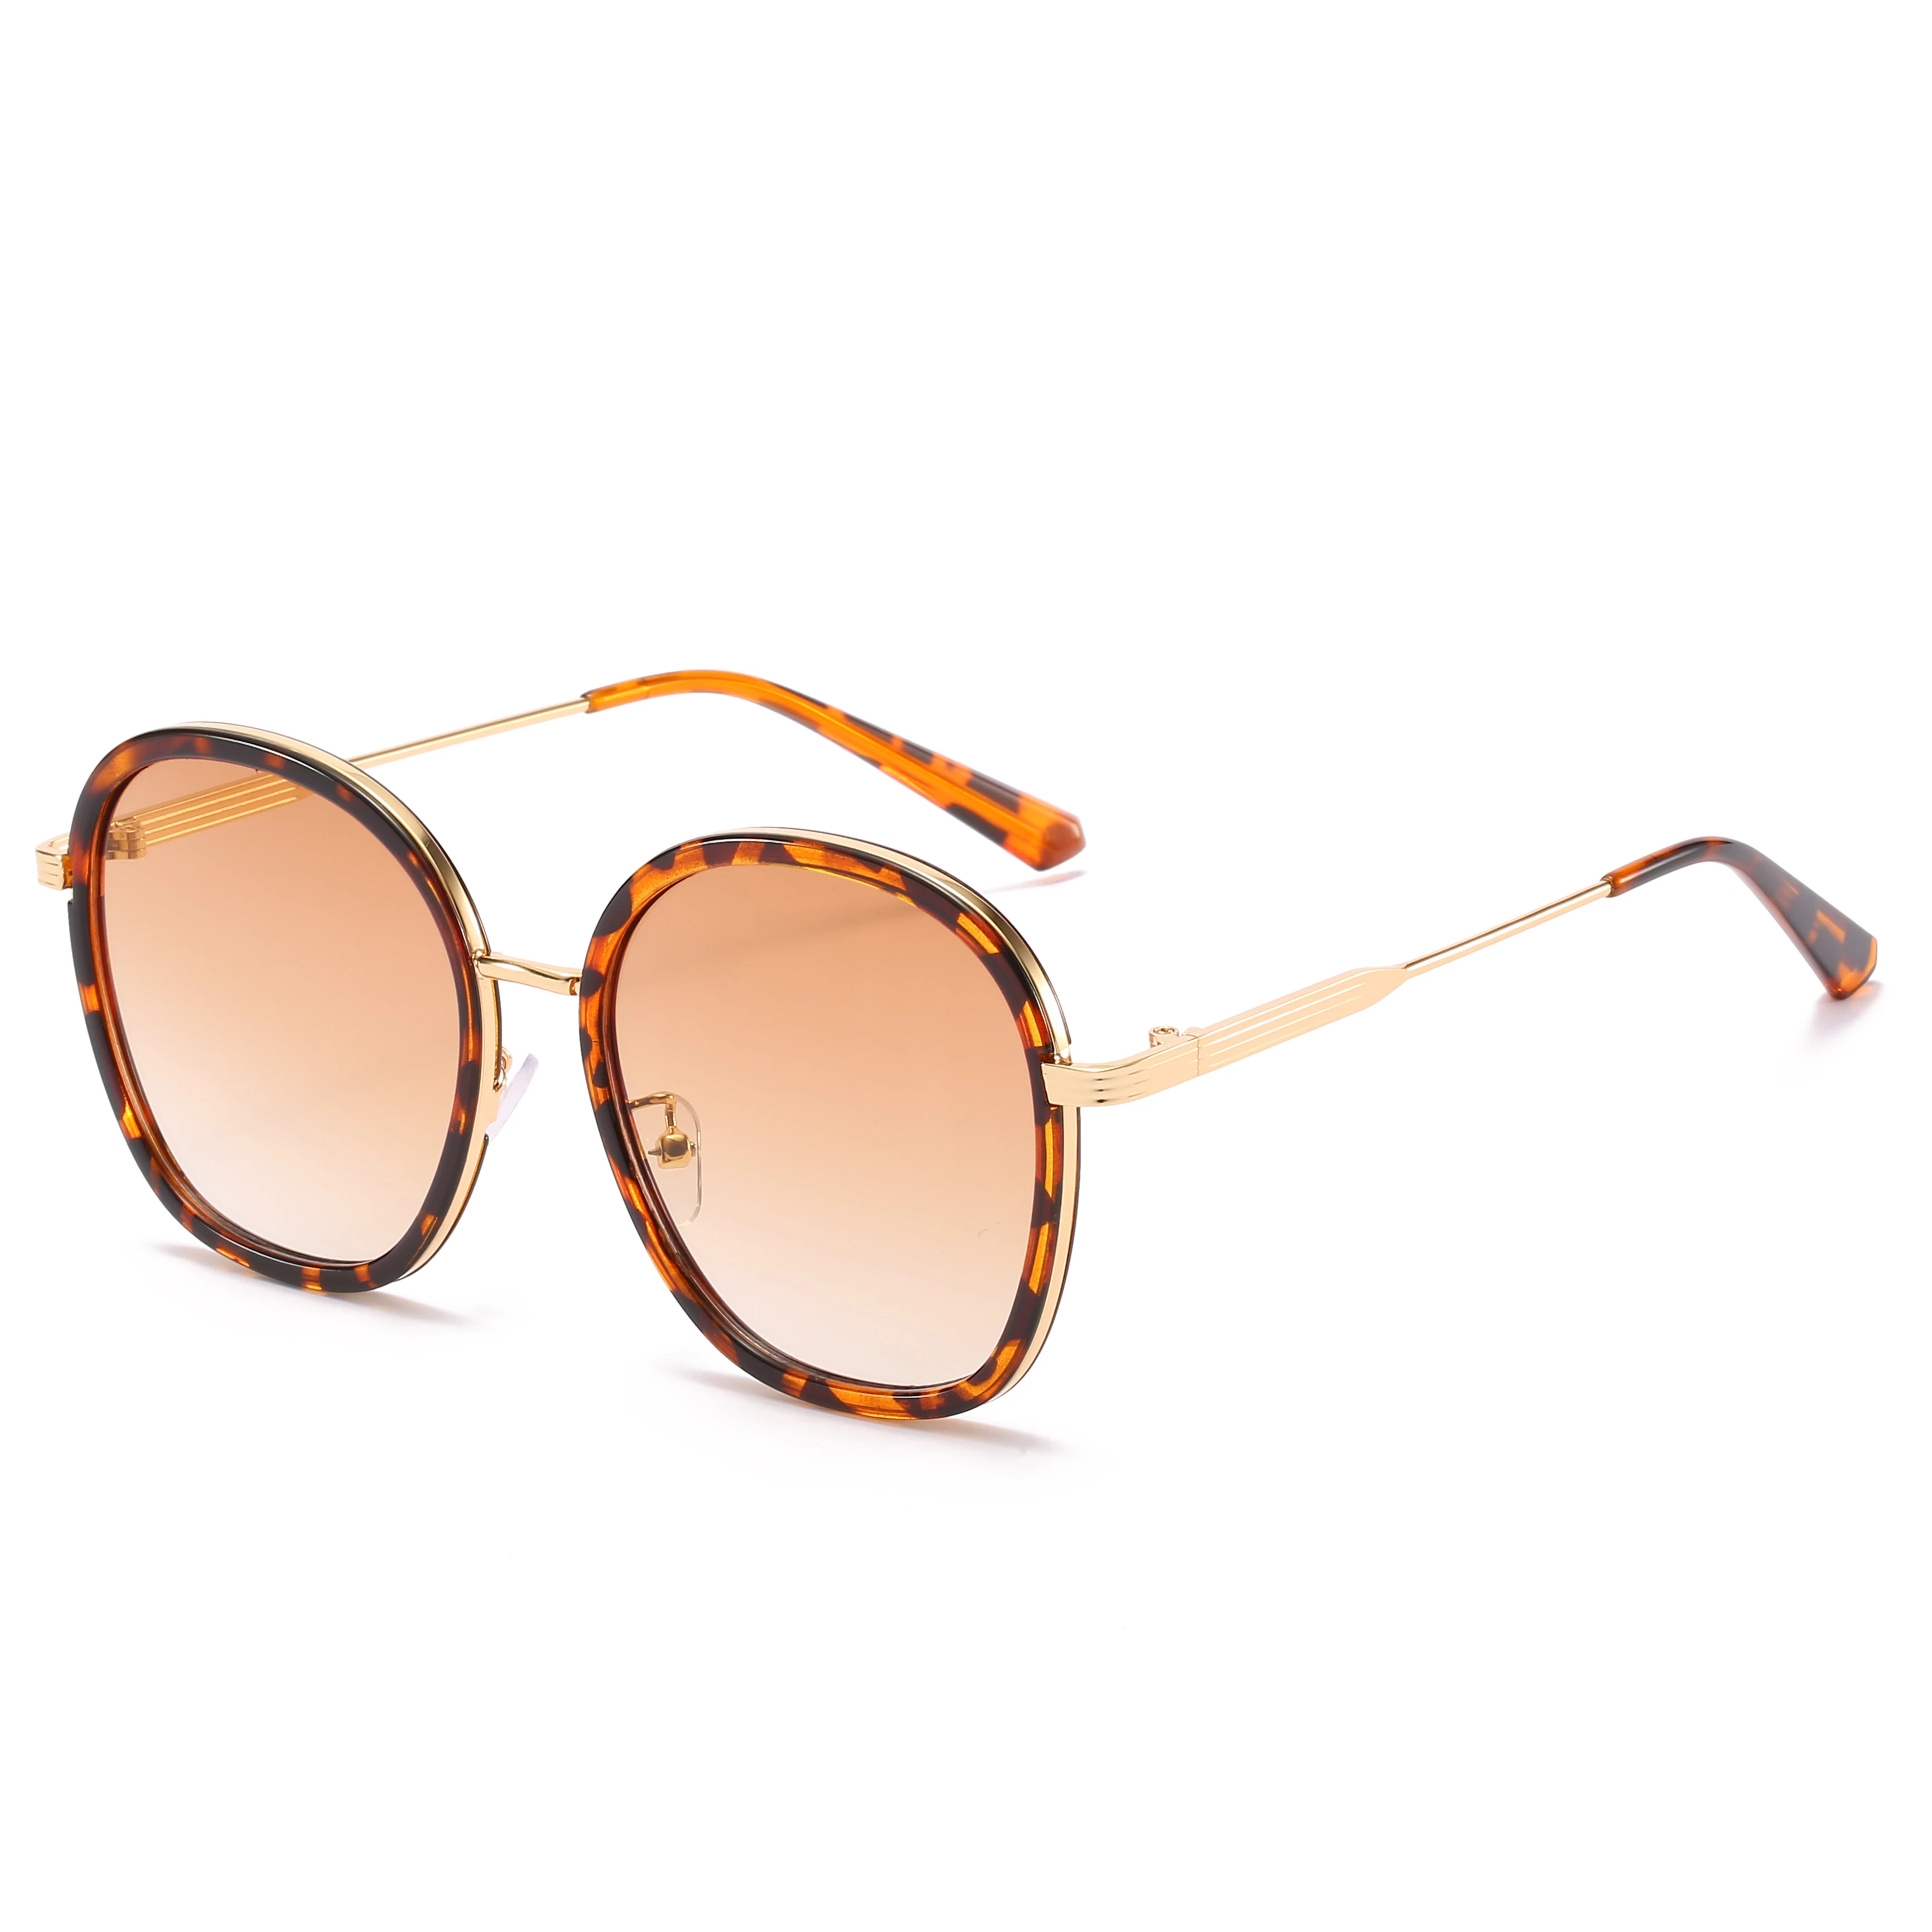 

Banei Pilot Sun Glasses Unisex Metal UV 400 Custom Logo Shades Vintage Versatile 2020 New Arrivals Cute Sunglasses